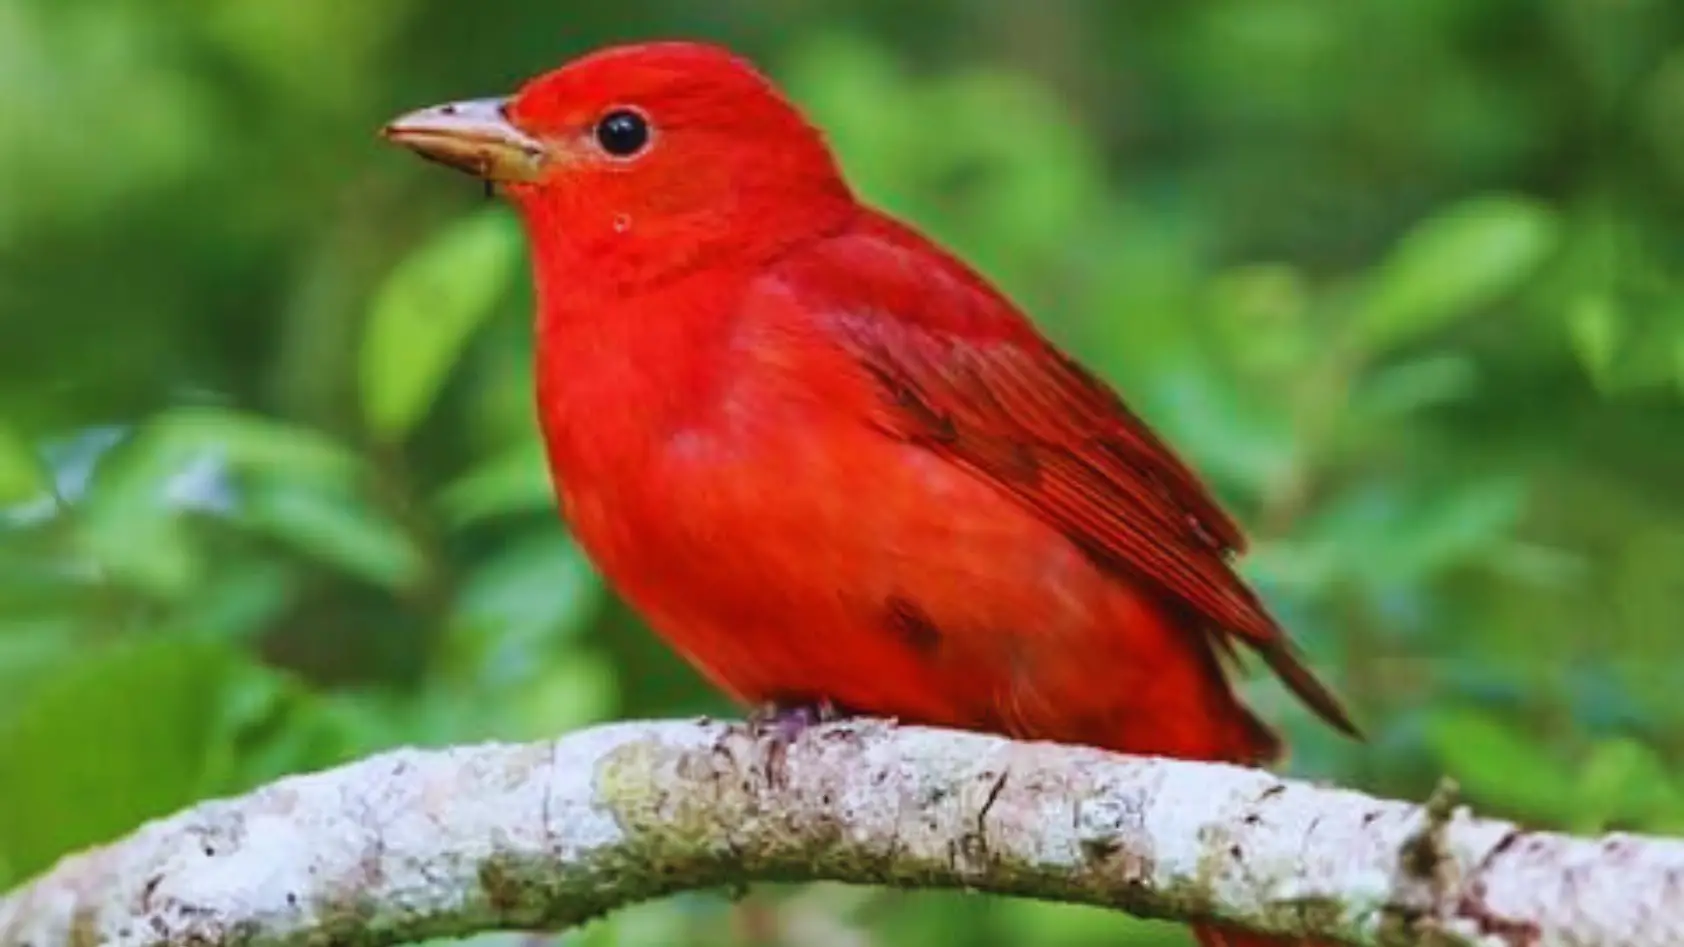 Red Birds in Alabama